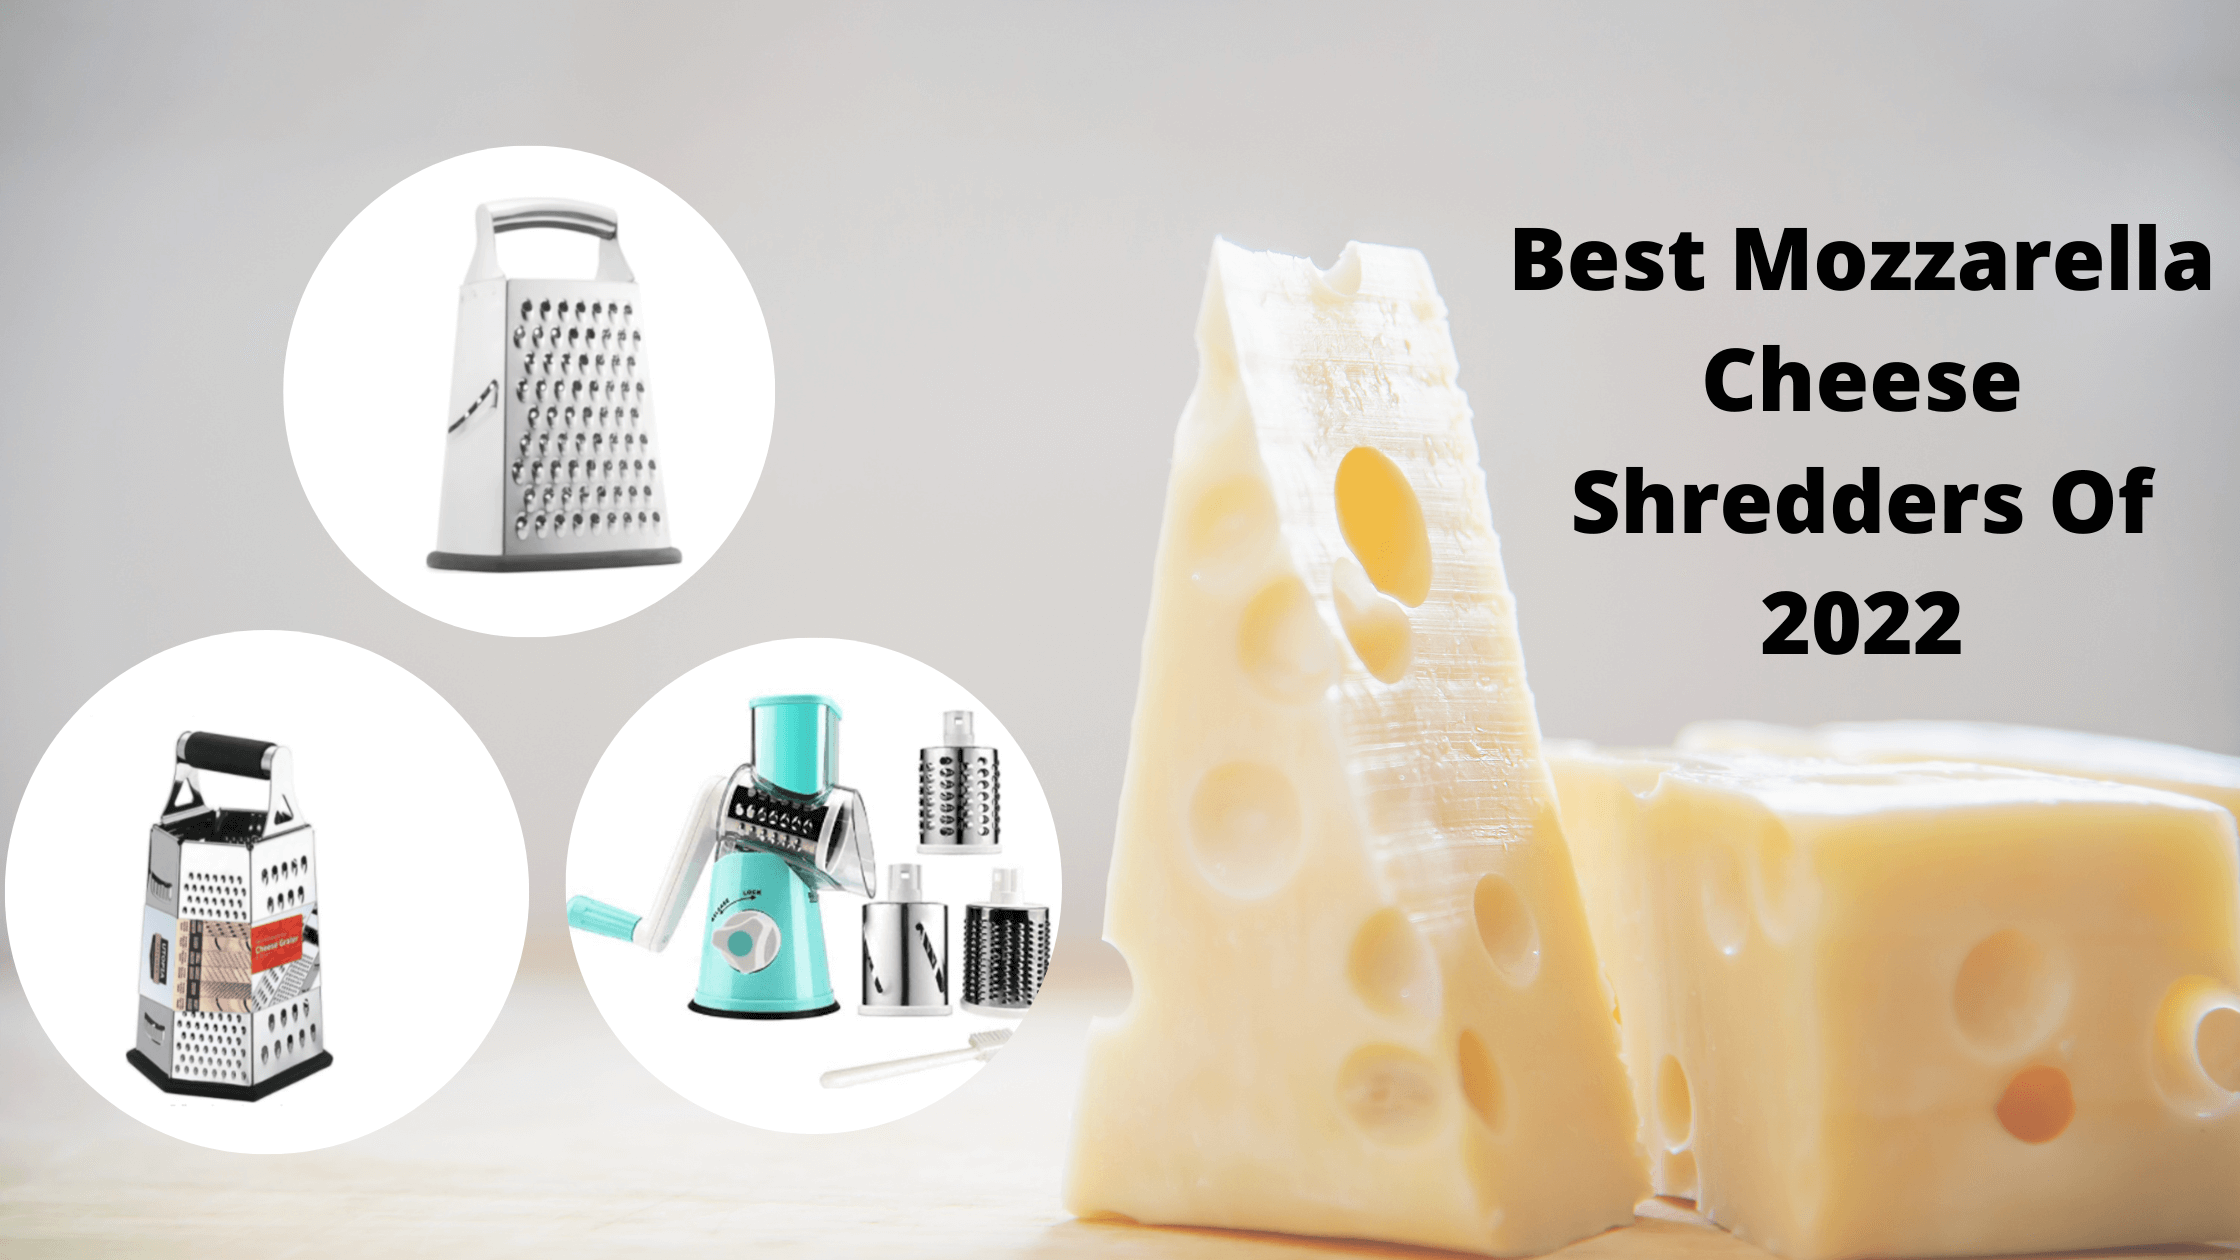 Best Mozzarella Cheese Shredders - 2022